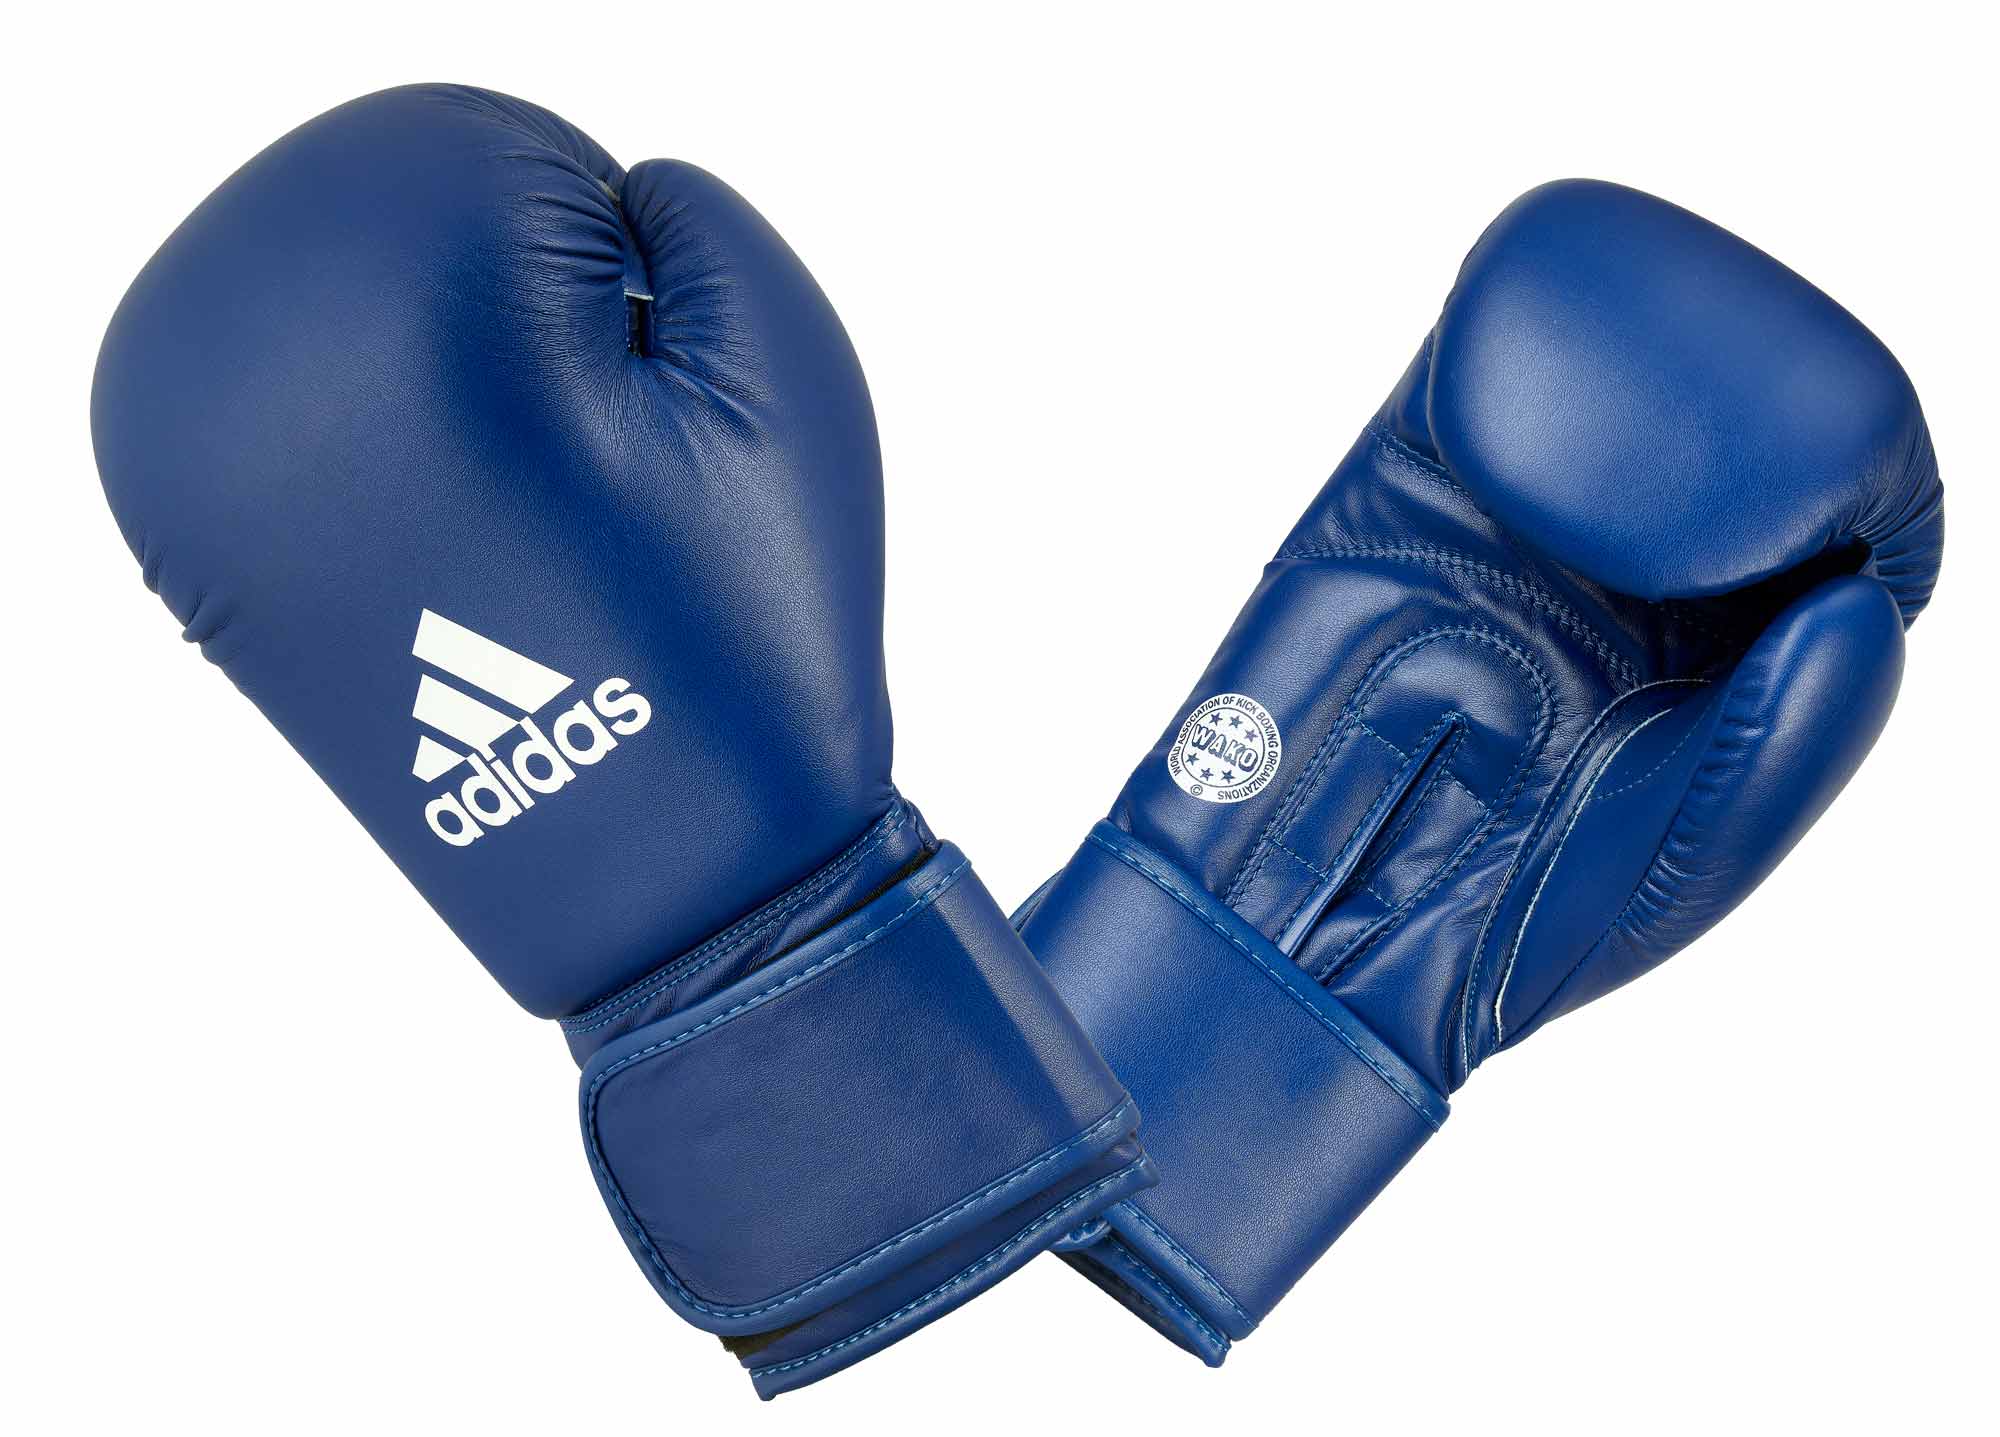 Boxhandschuhe Training Ausrüstung | Kickbox WAKO | Blau | ADIDAS Boxhandschuhe 10oz. Kickboxen Handschuhe